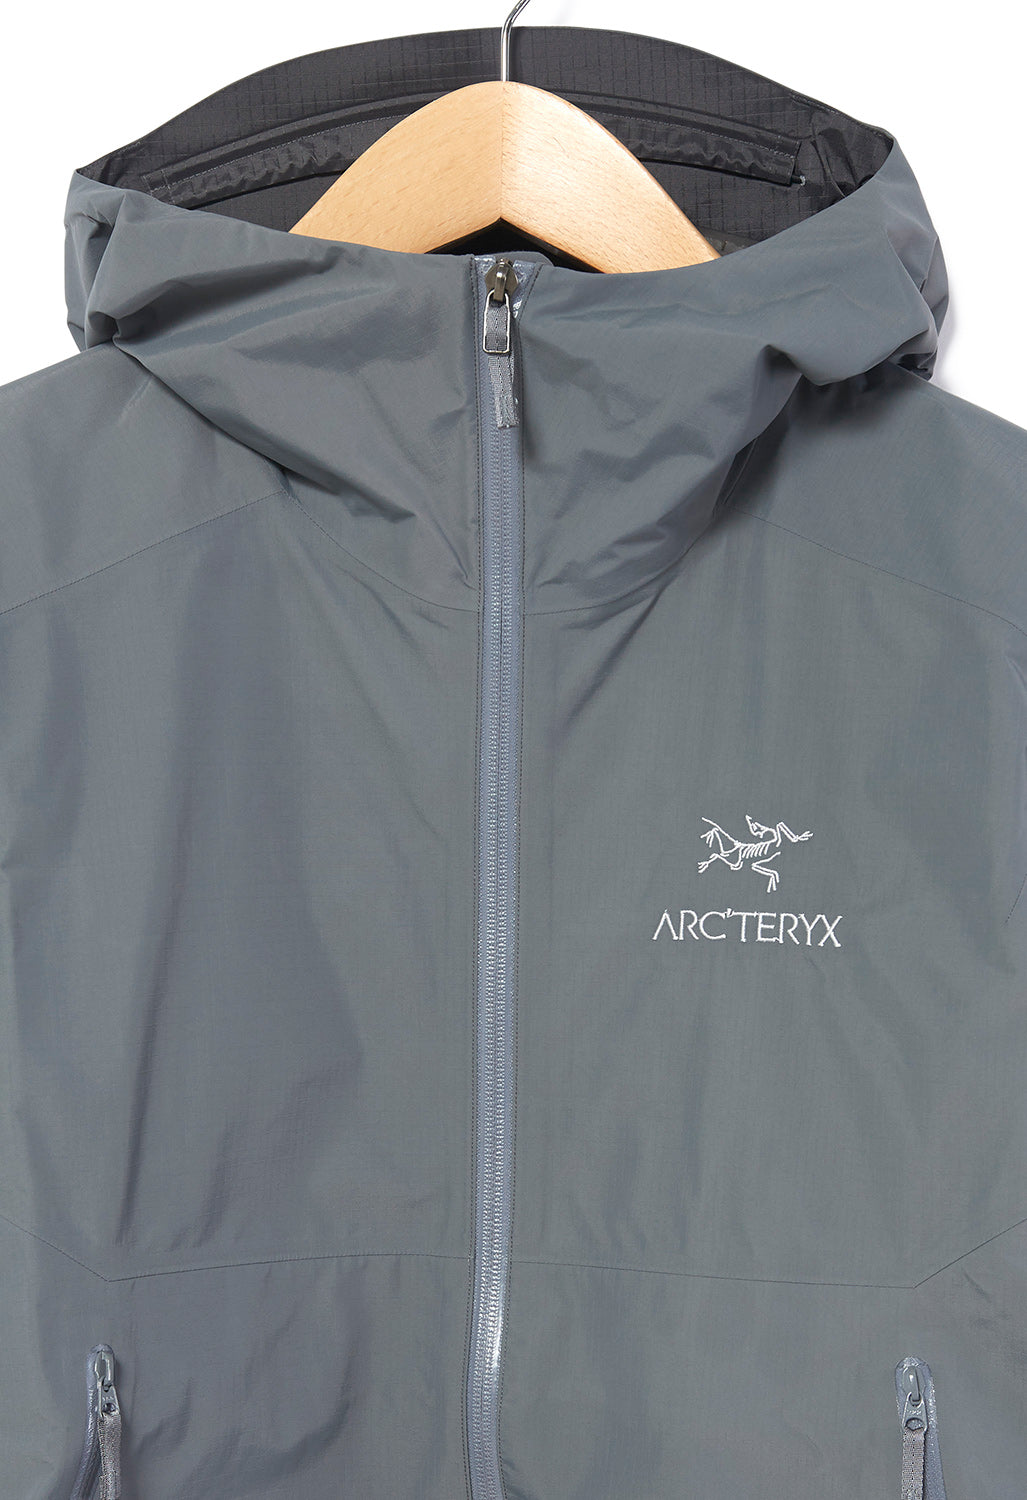 Arc'teryx Zeta SL GORE-TEX Paclite Plus Men's Jacket - Microchip